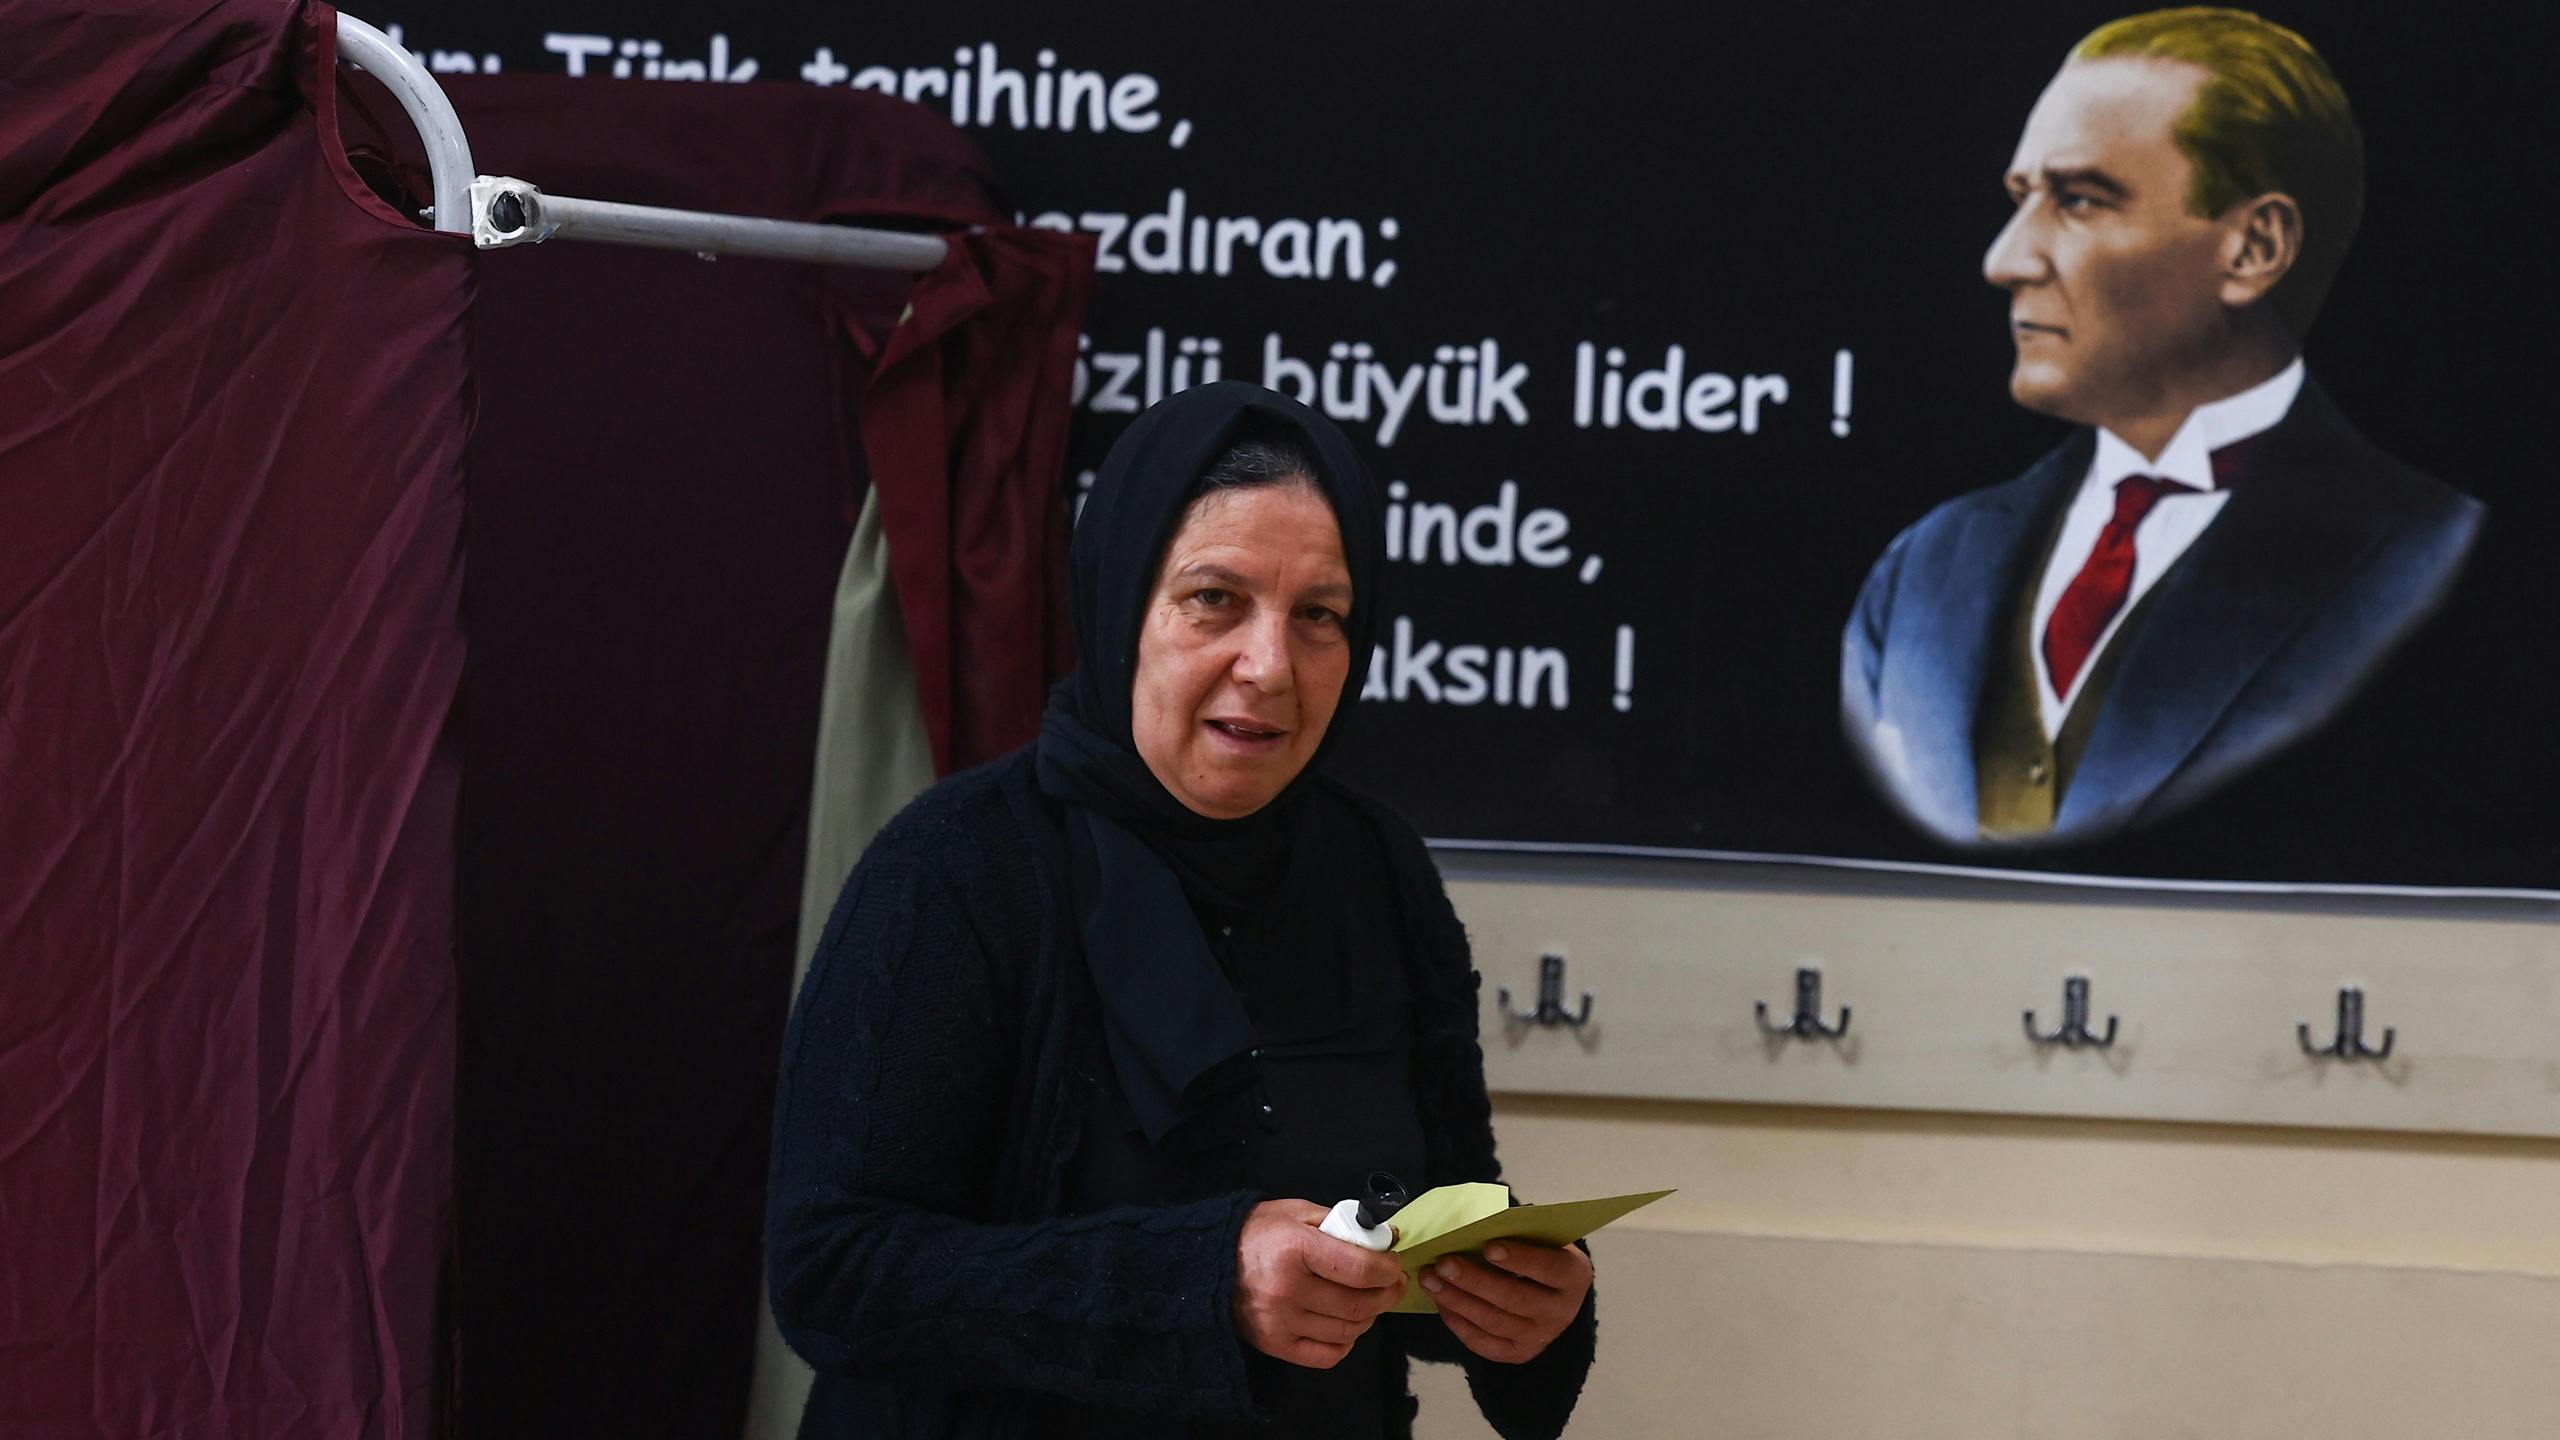 Turkse stembureaus open voor slotronde presidentsverkiezing